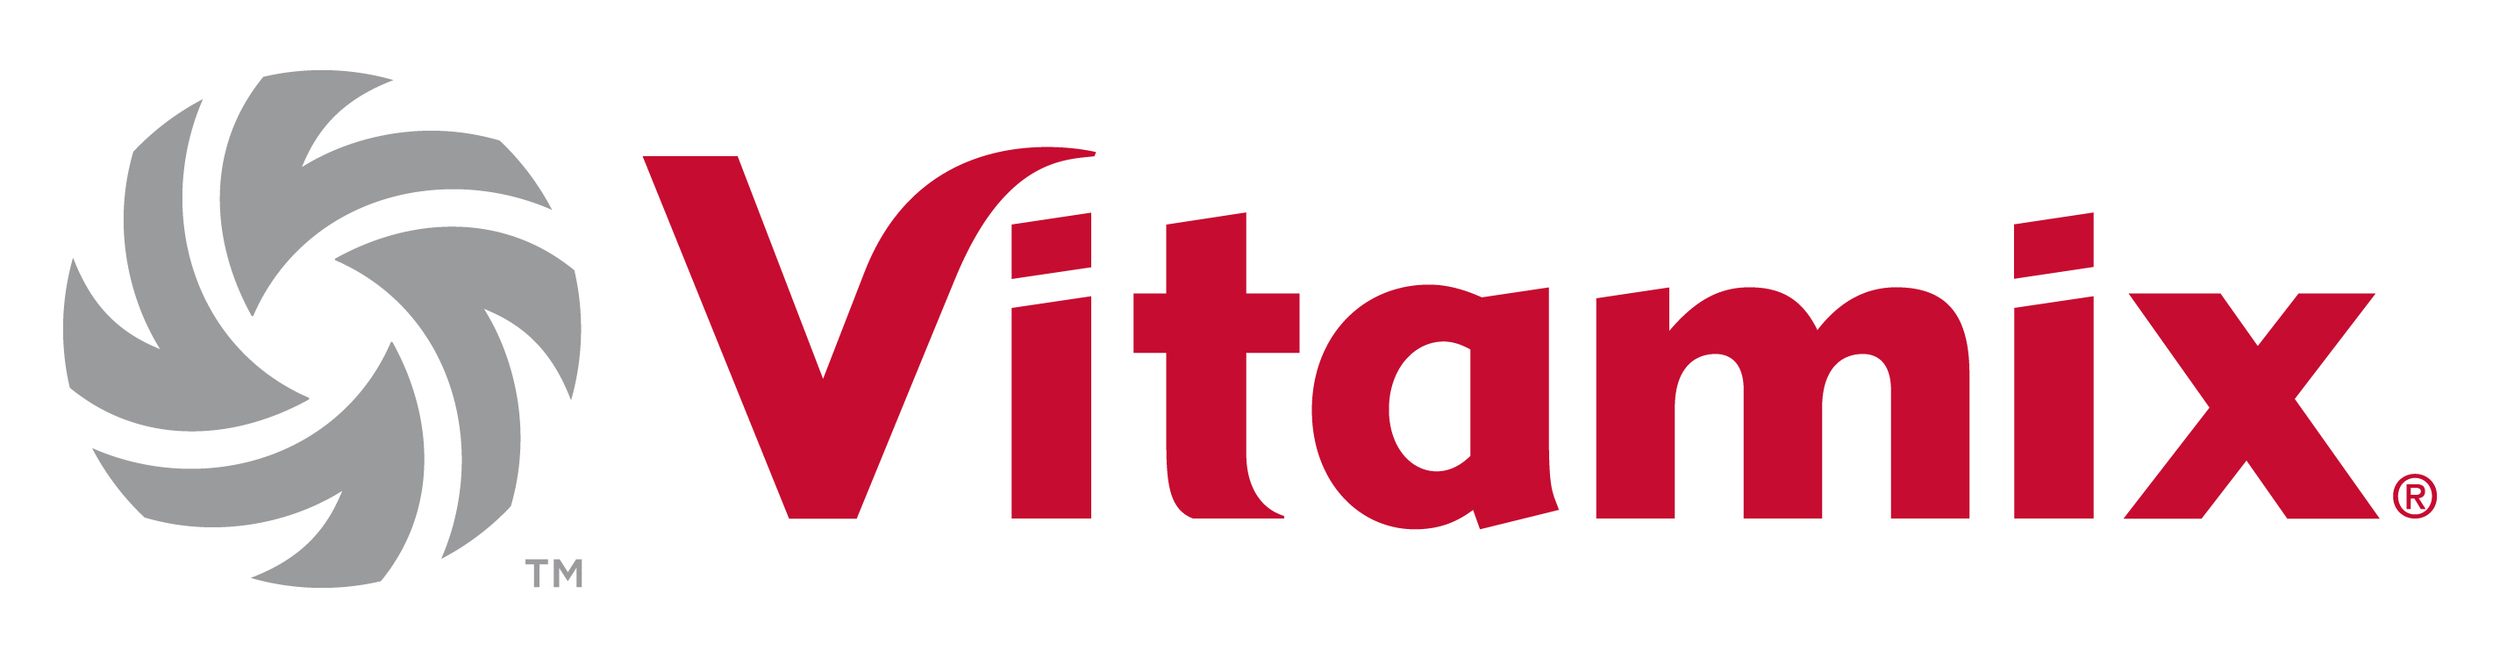 Vitamix_Logo.jpg